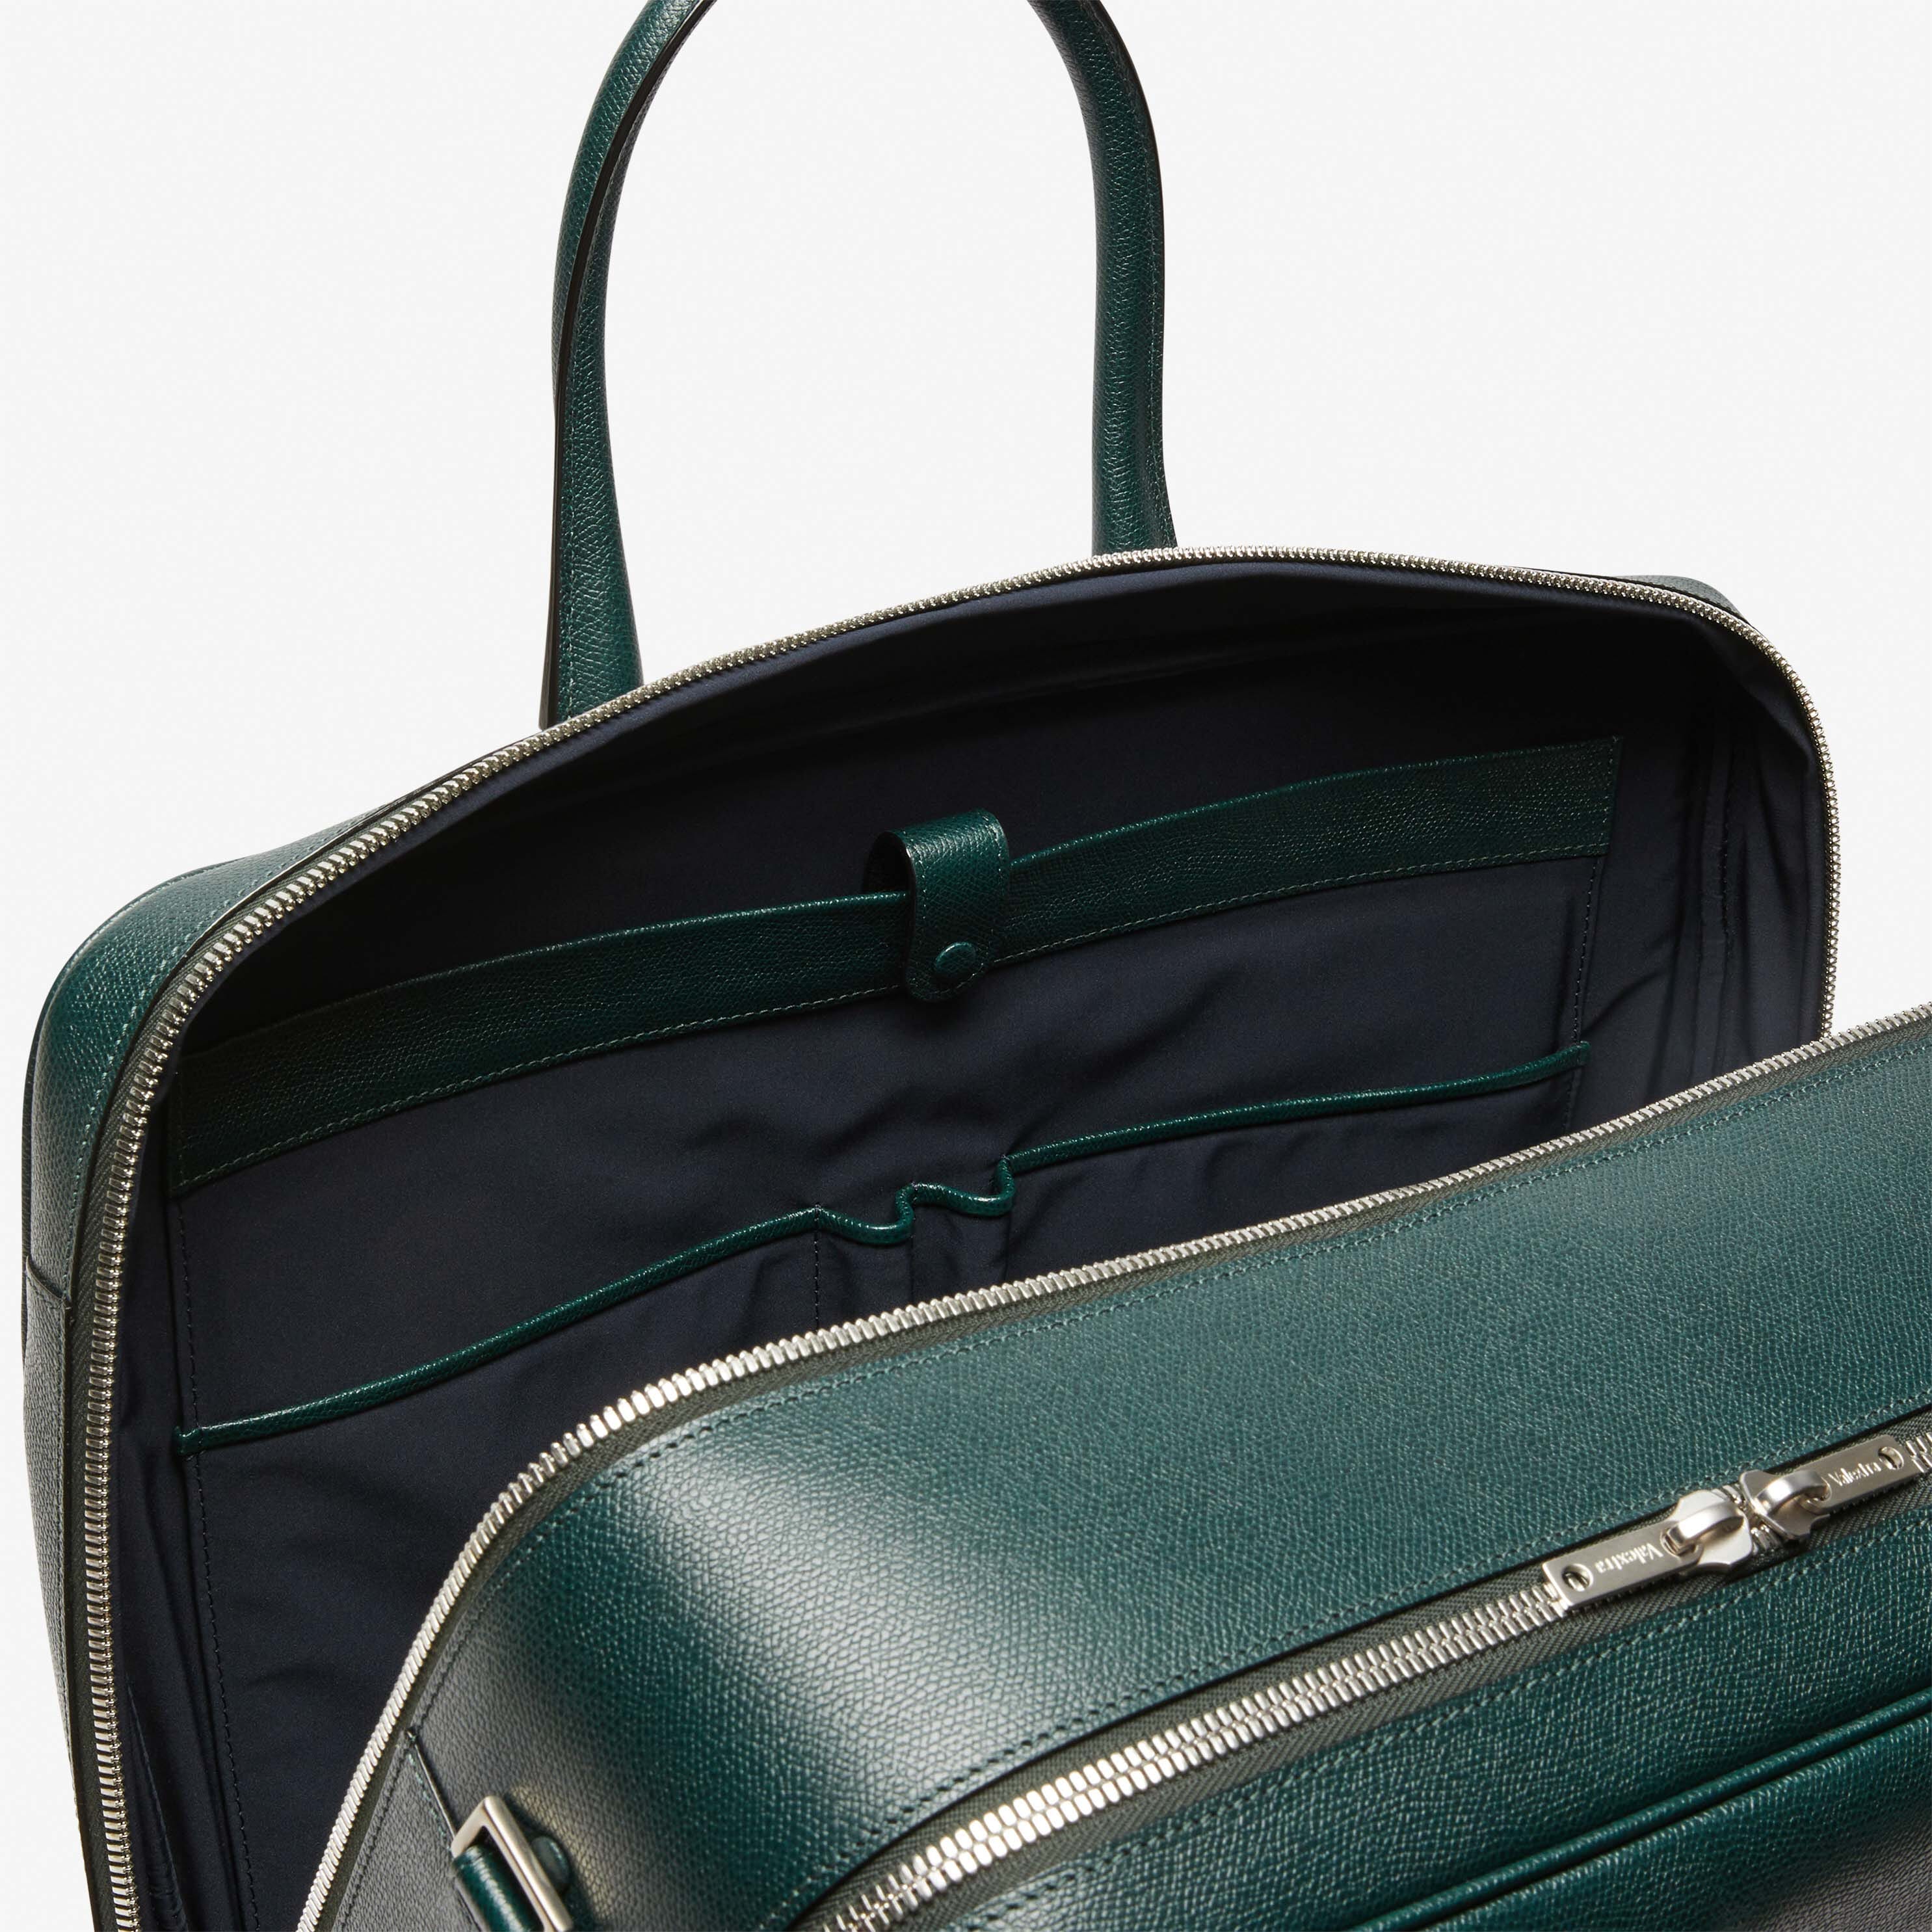 Avietta Travel Bag Two Chambers - Valextra Green - Vitello VS - Valextra - 3